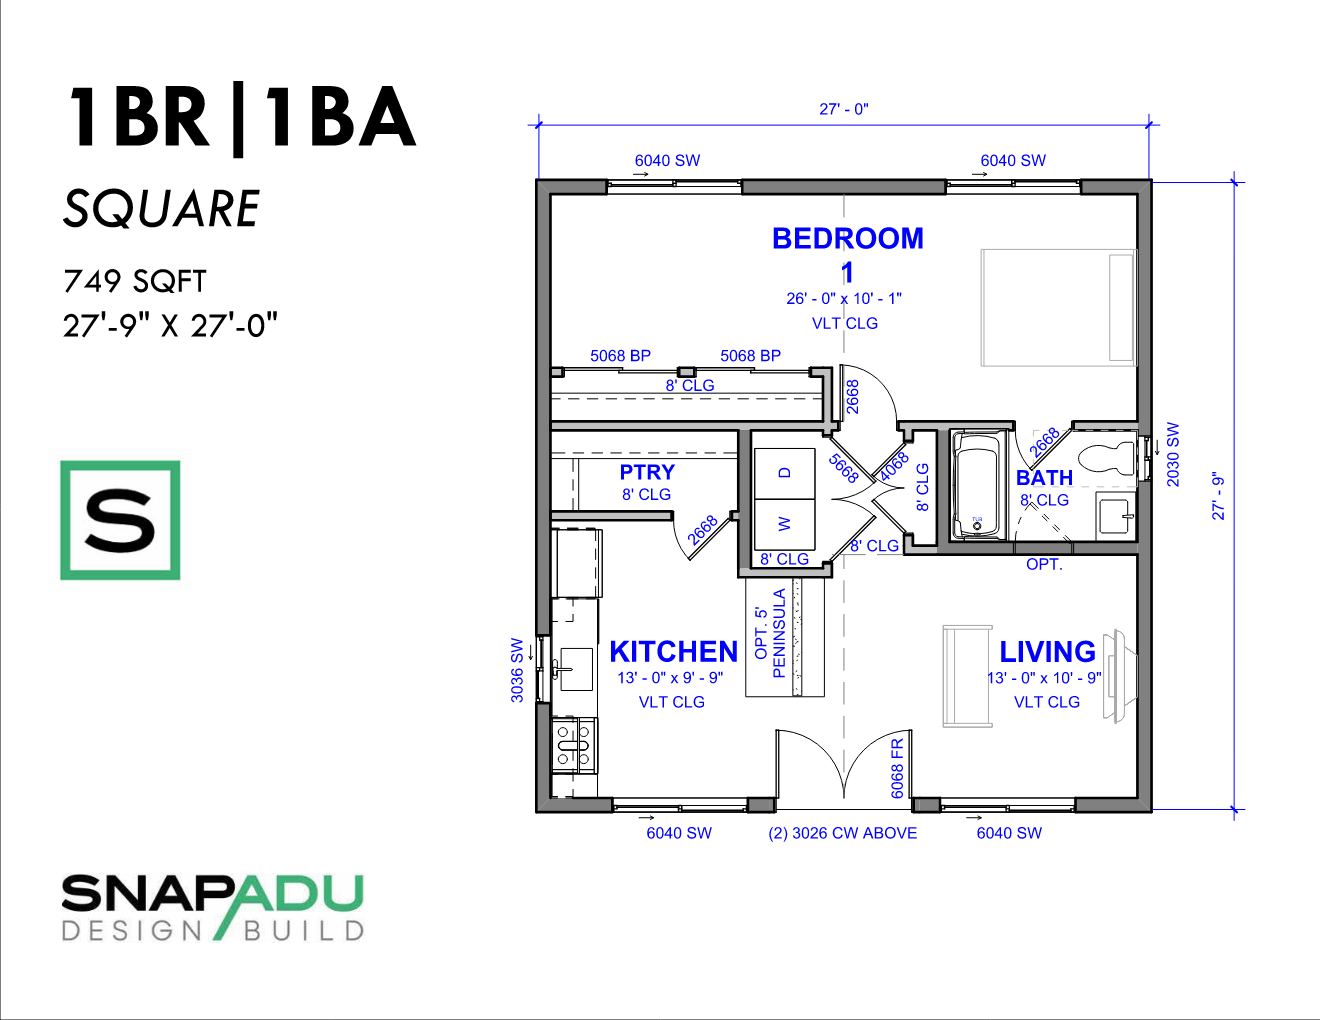 ADU Floor Plan 1BR 1BA Under 750 sqft Square 27x27